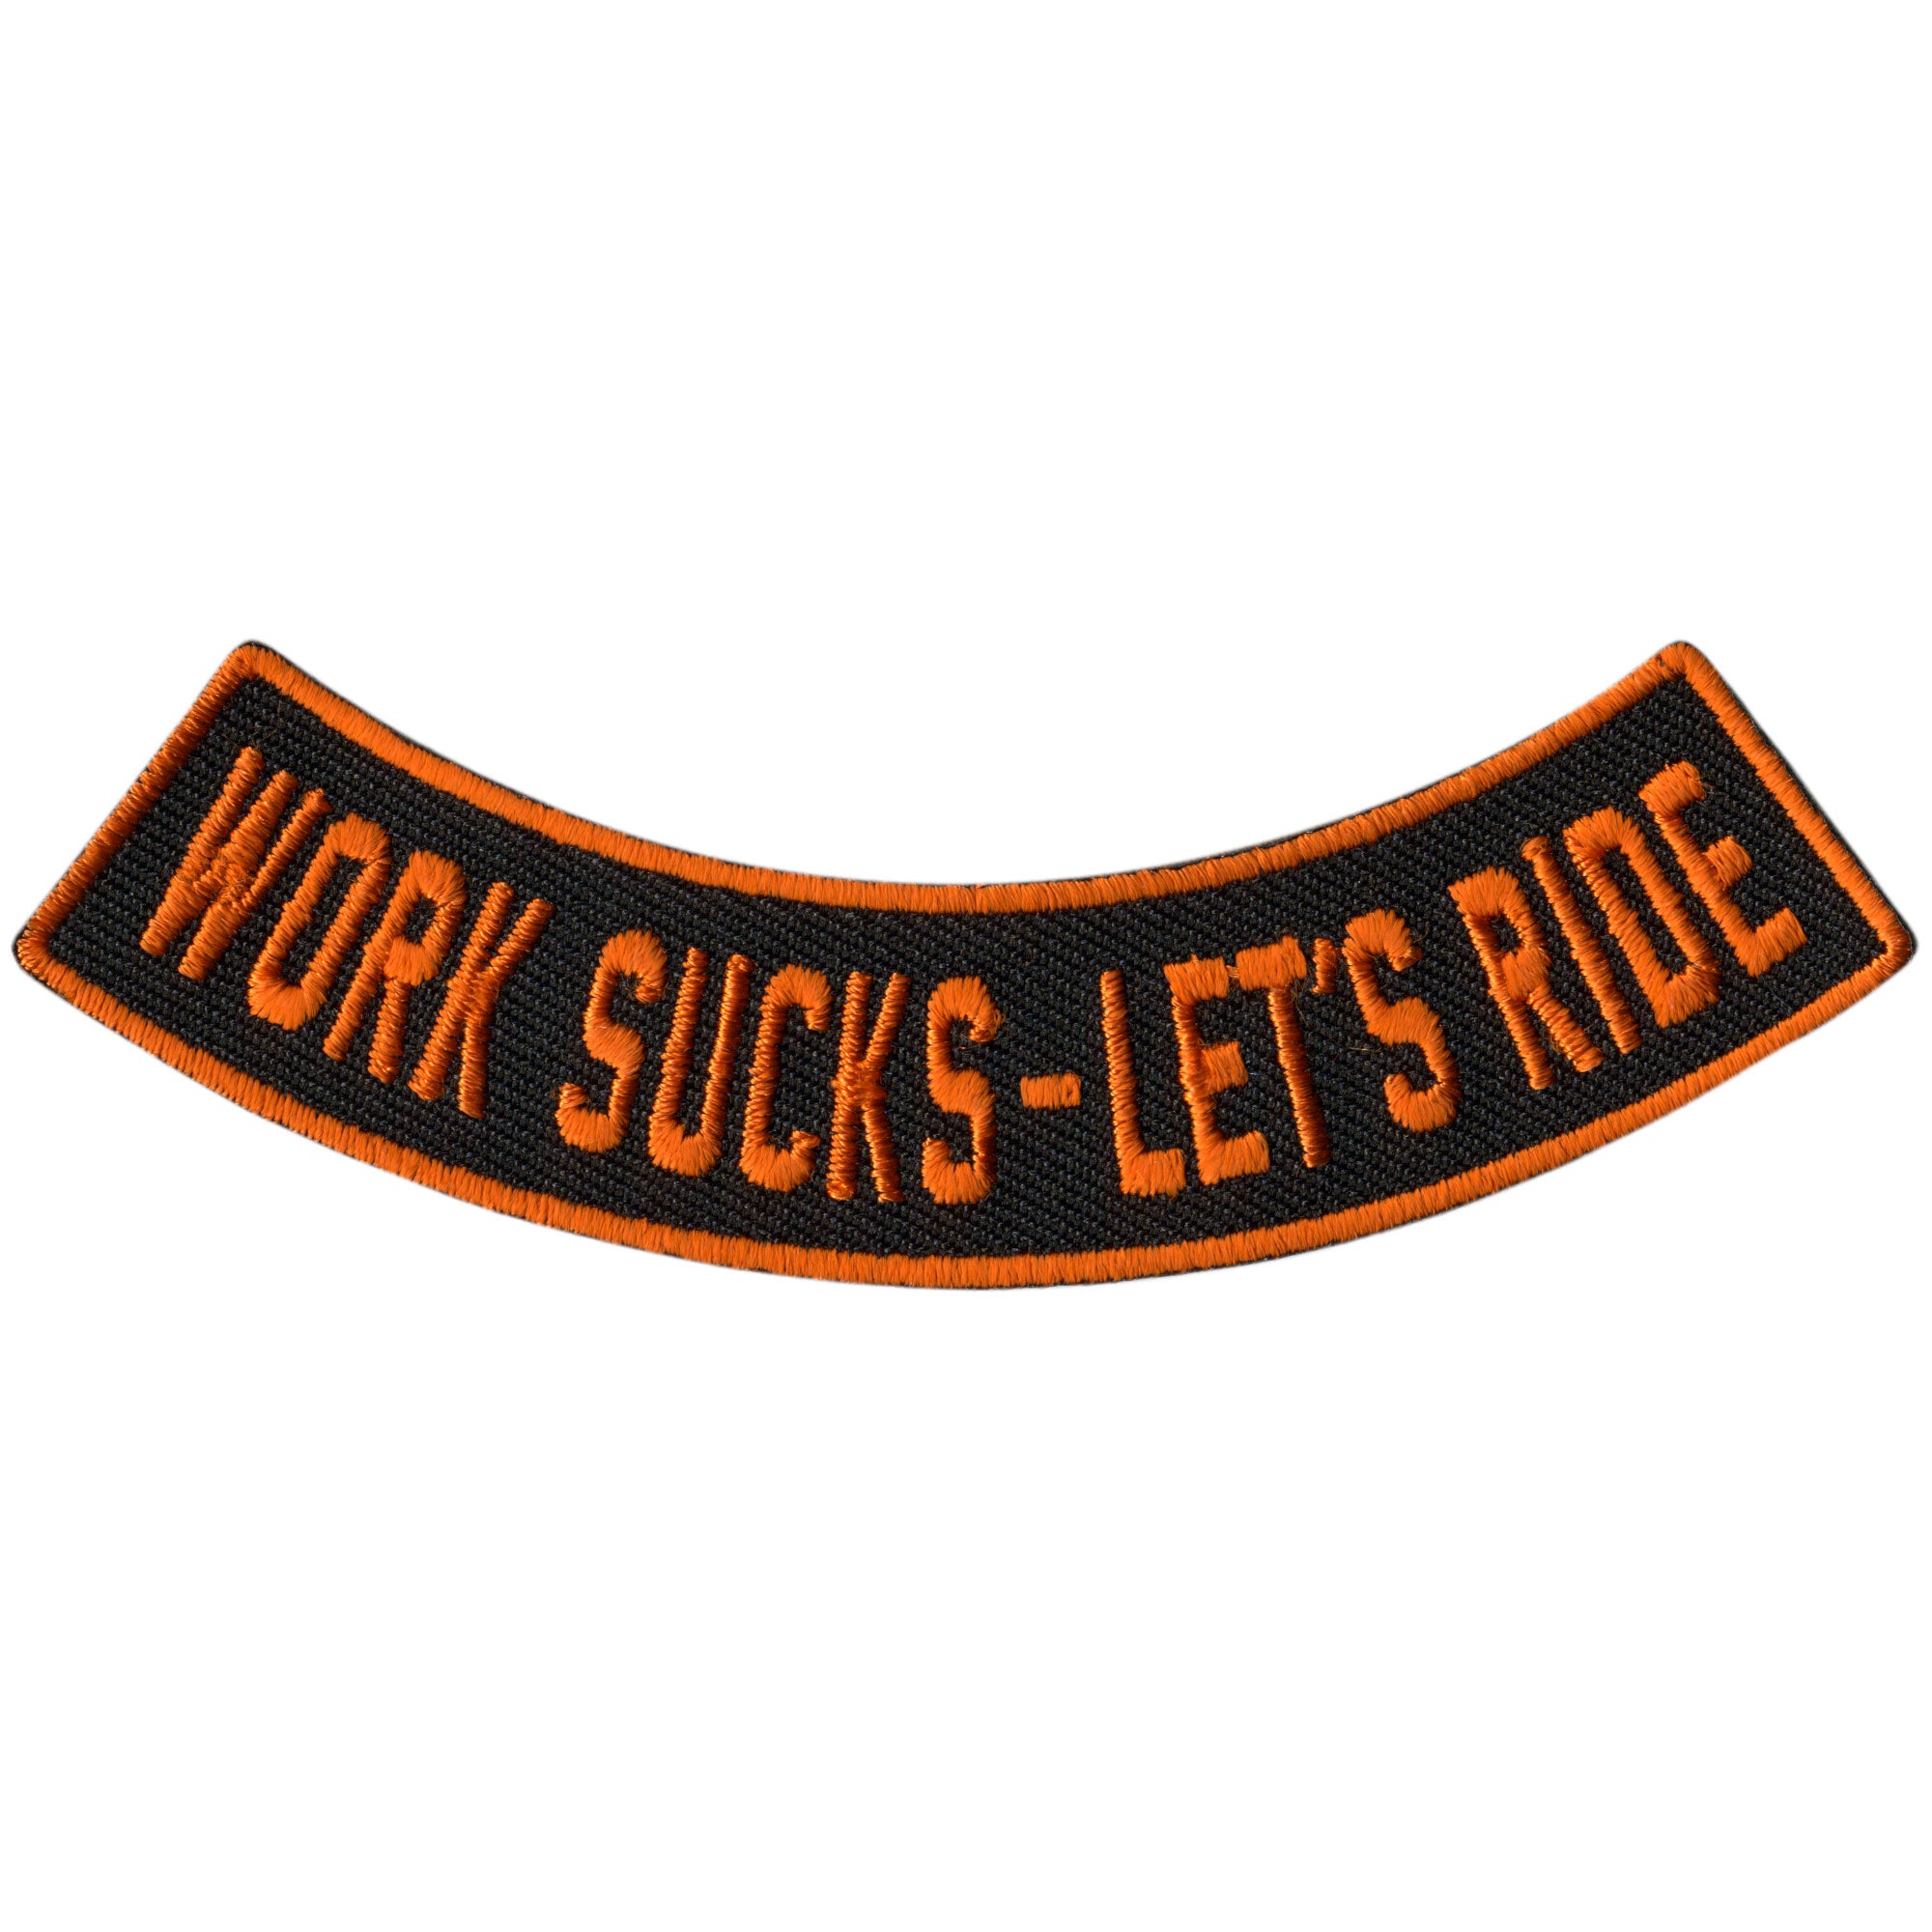 Hot Leathers Work Sucks - Let's Ride 4” X 1” Bottom Rocker Patch